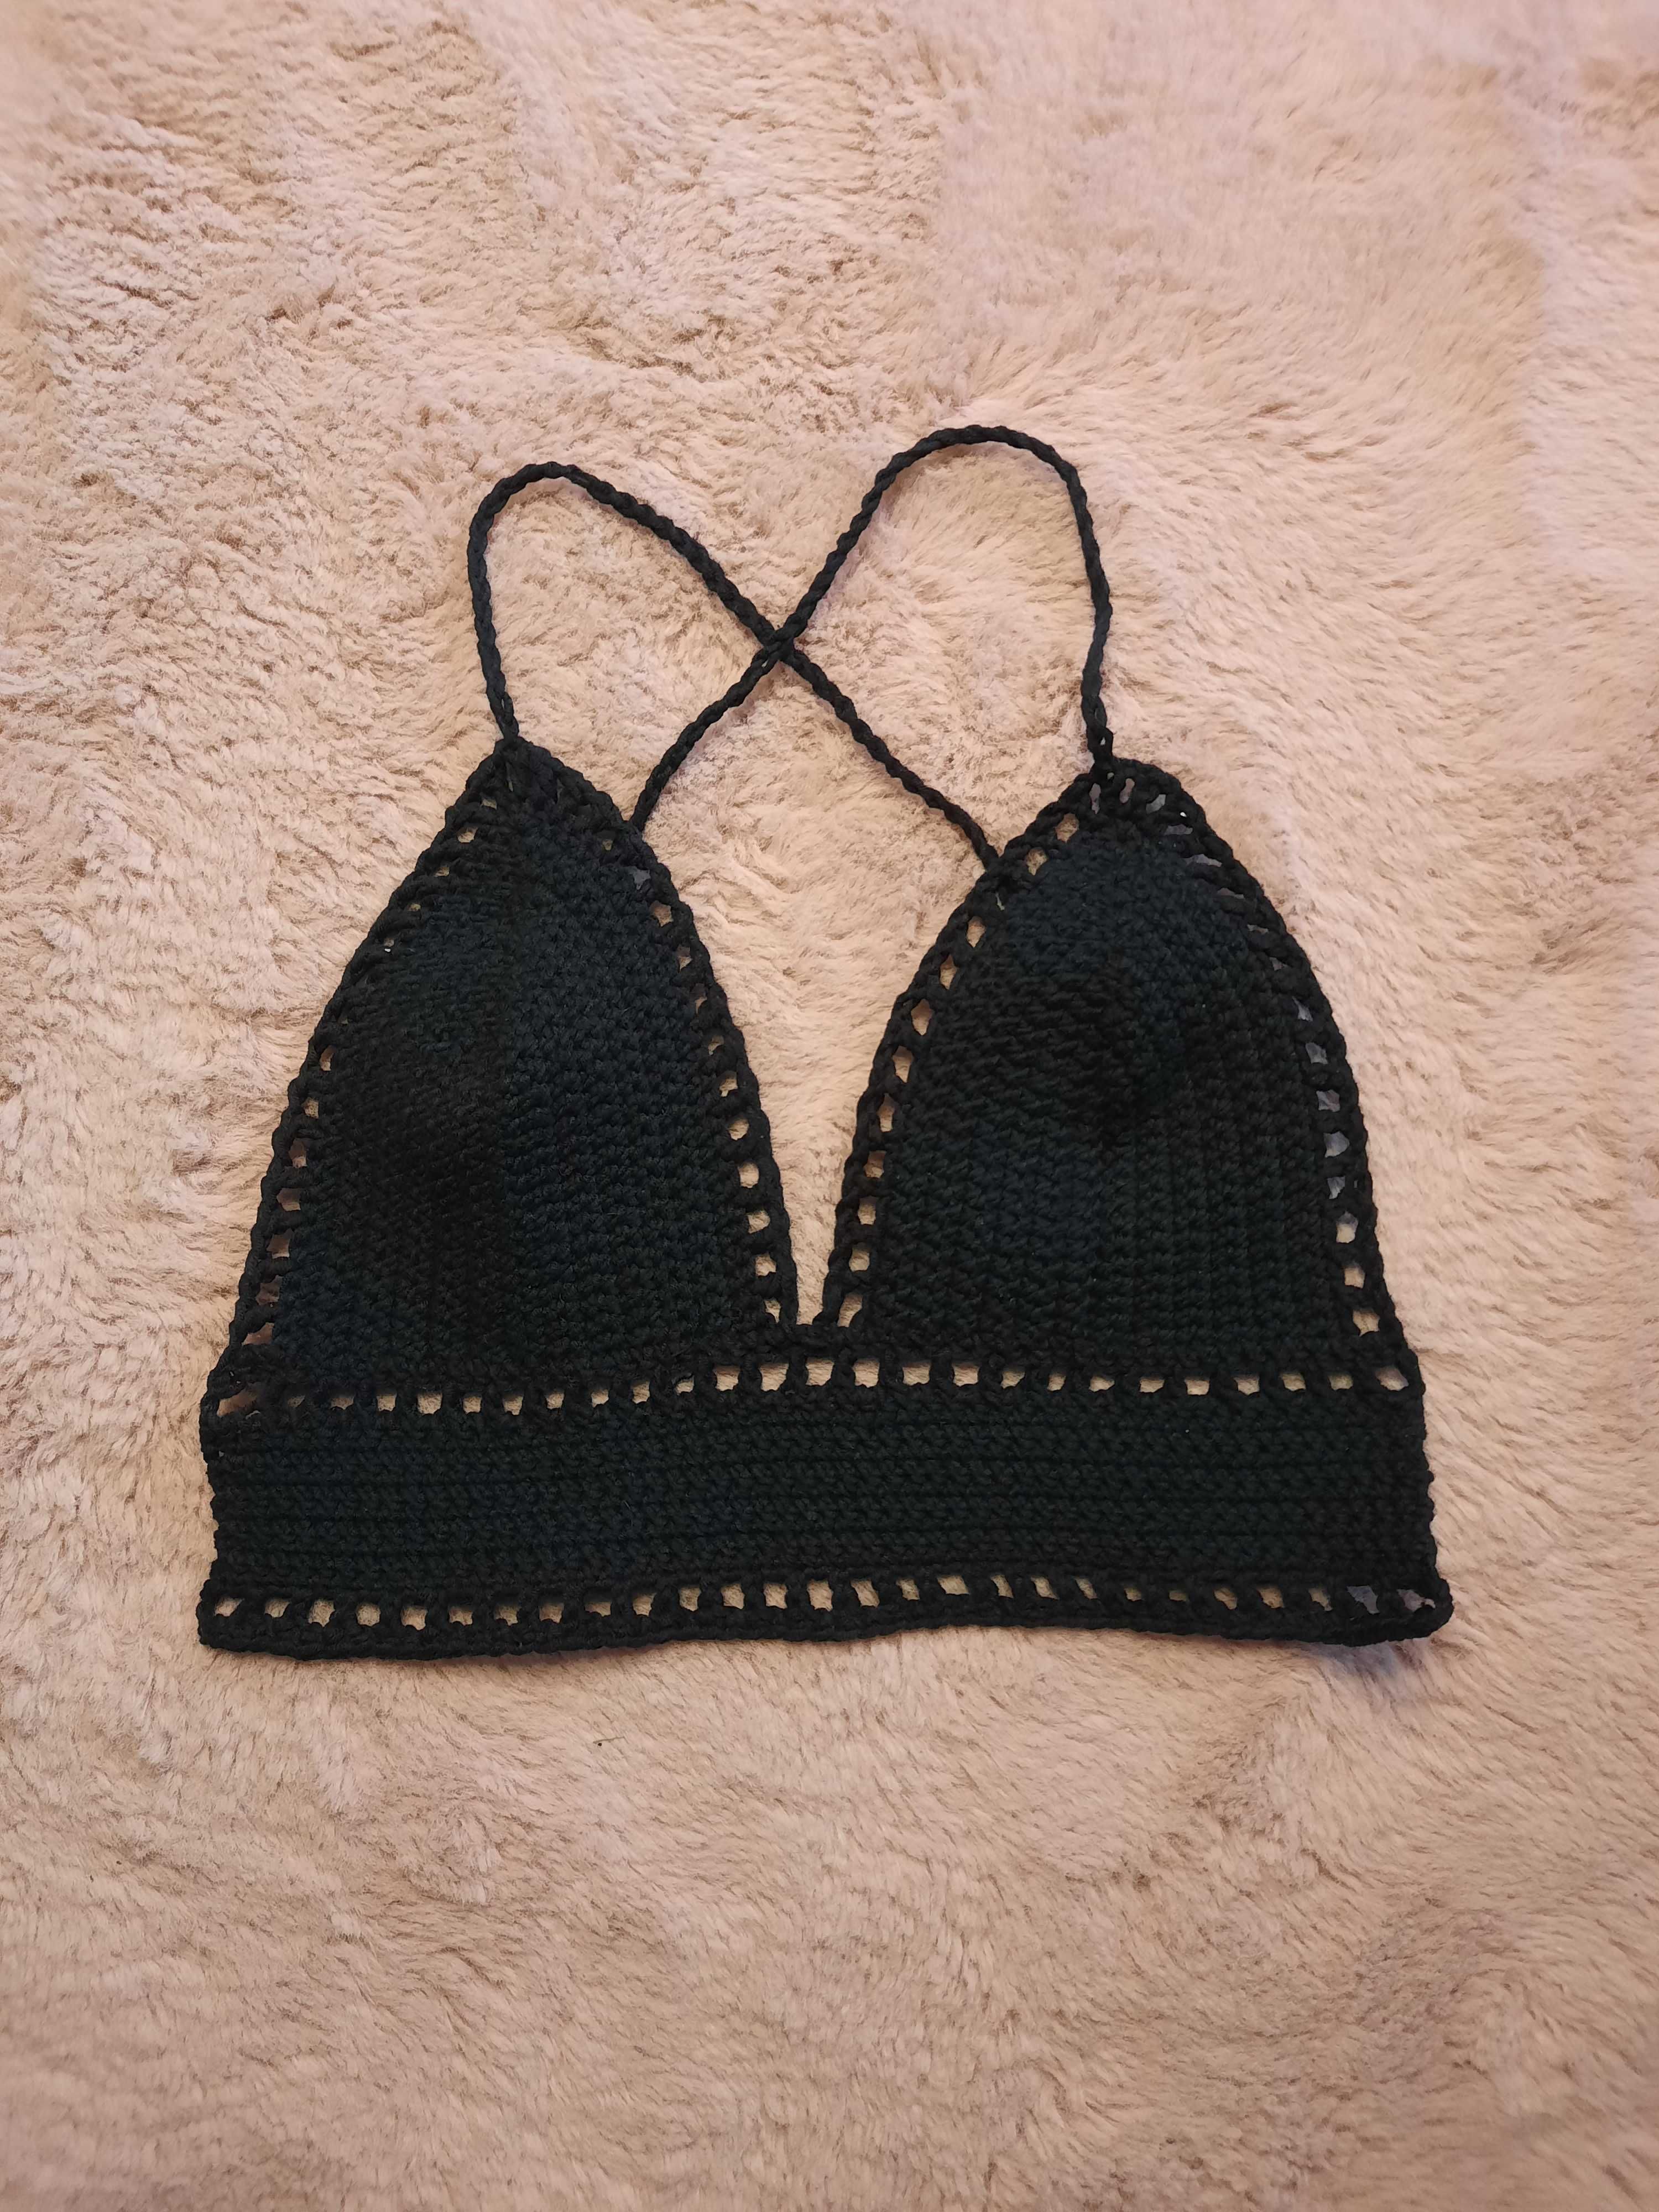 Crochet crop top szydełkowy handmade